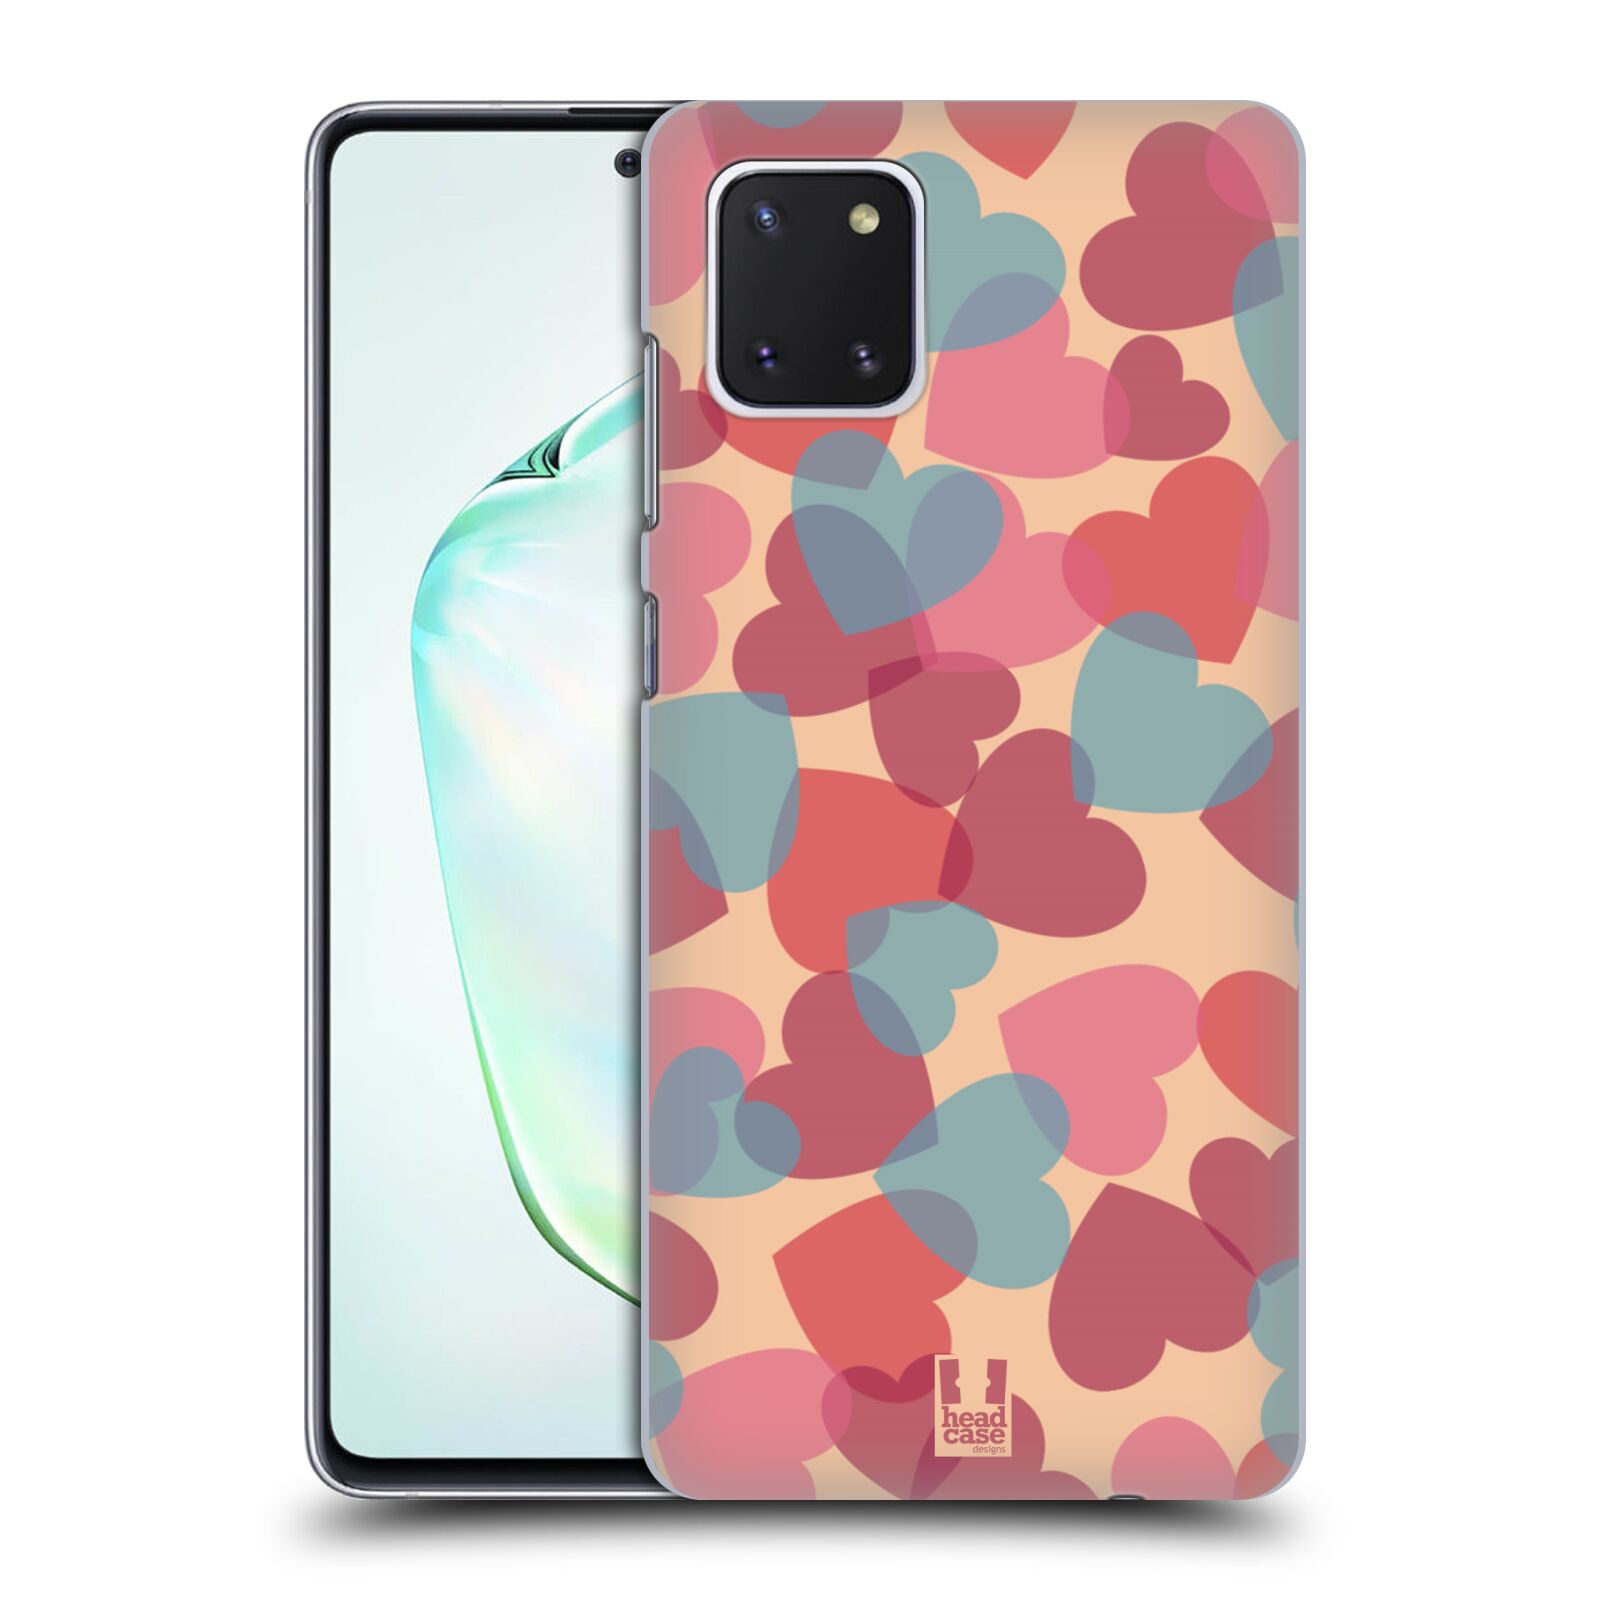 Zadní obal pro mobil Samsung Galaxy Note 10 Lite - HEAD CASE - Růžová srdíčka kreslený vzor